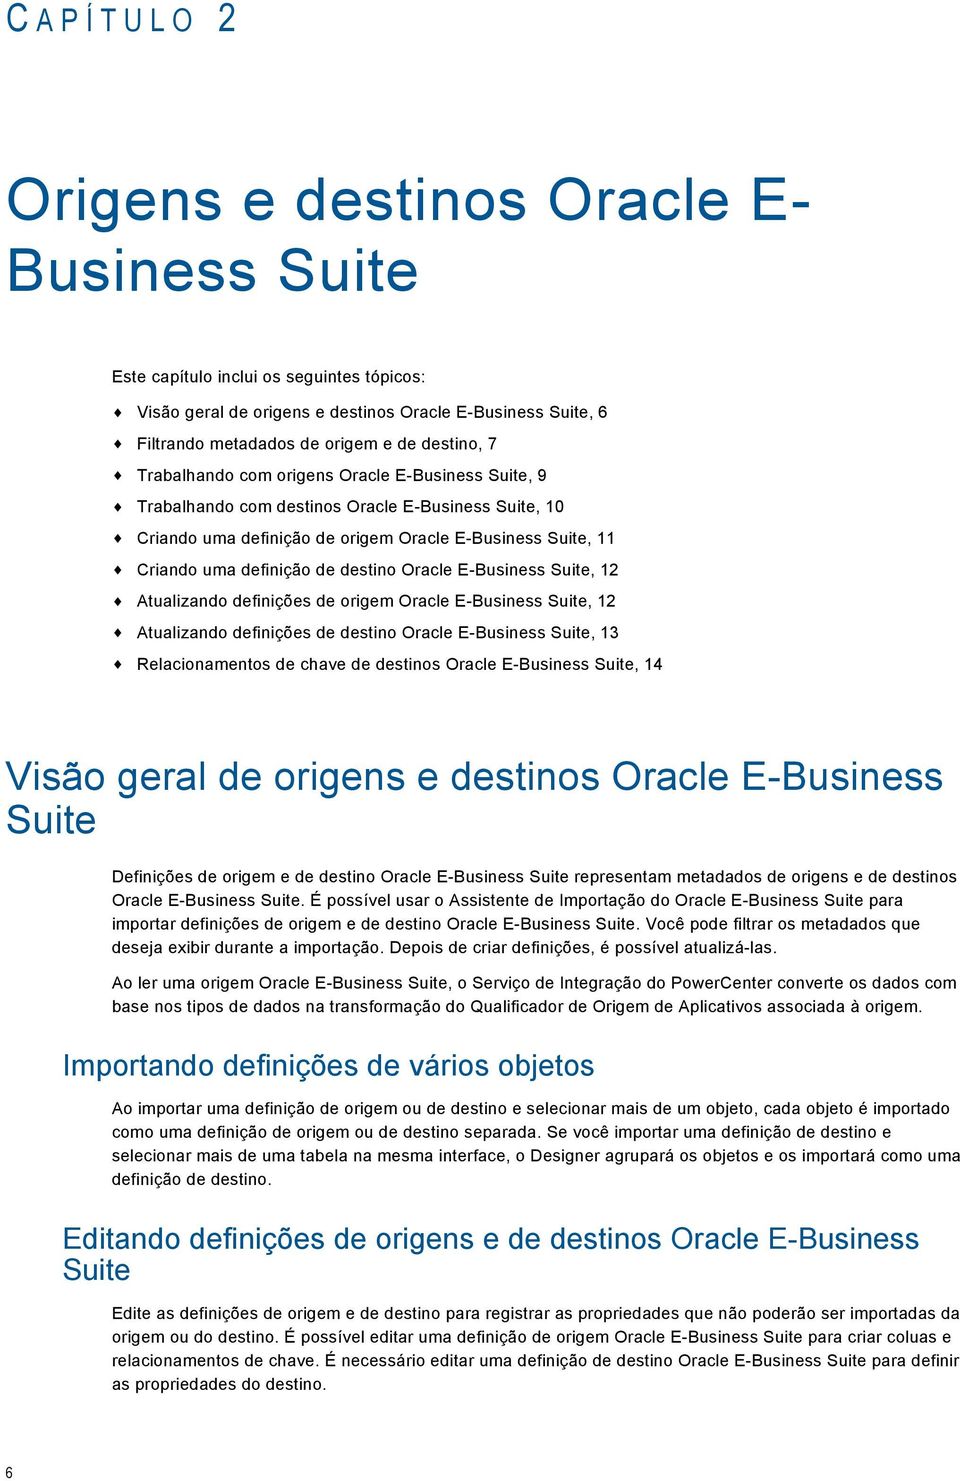 de destino Oracle E-Business Suite, 12 Atualizando definições de origem Oracle E-Business Suite, 12 Atualizando definições de destino Oracle E-Business Suite, 13 Relacionamentos de chave de destinos